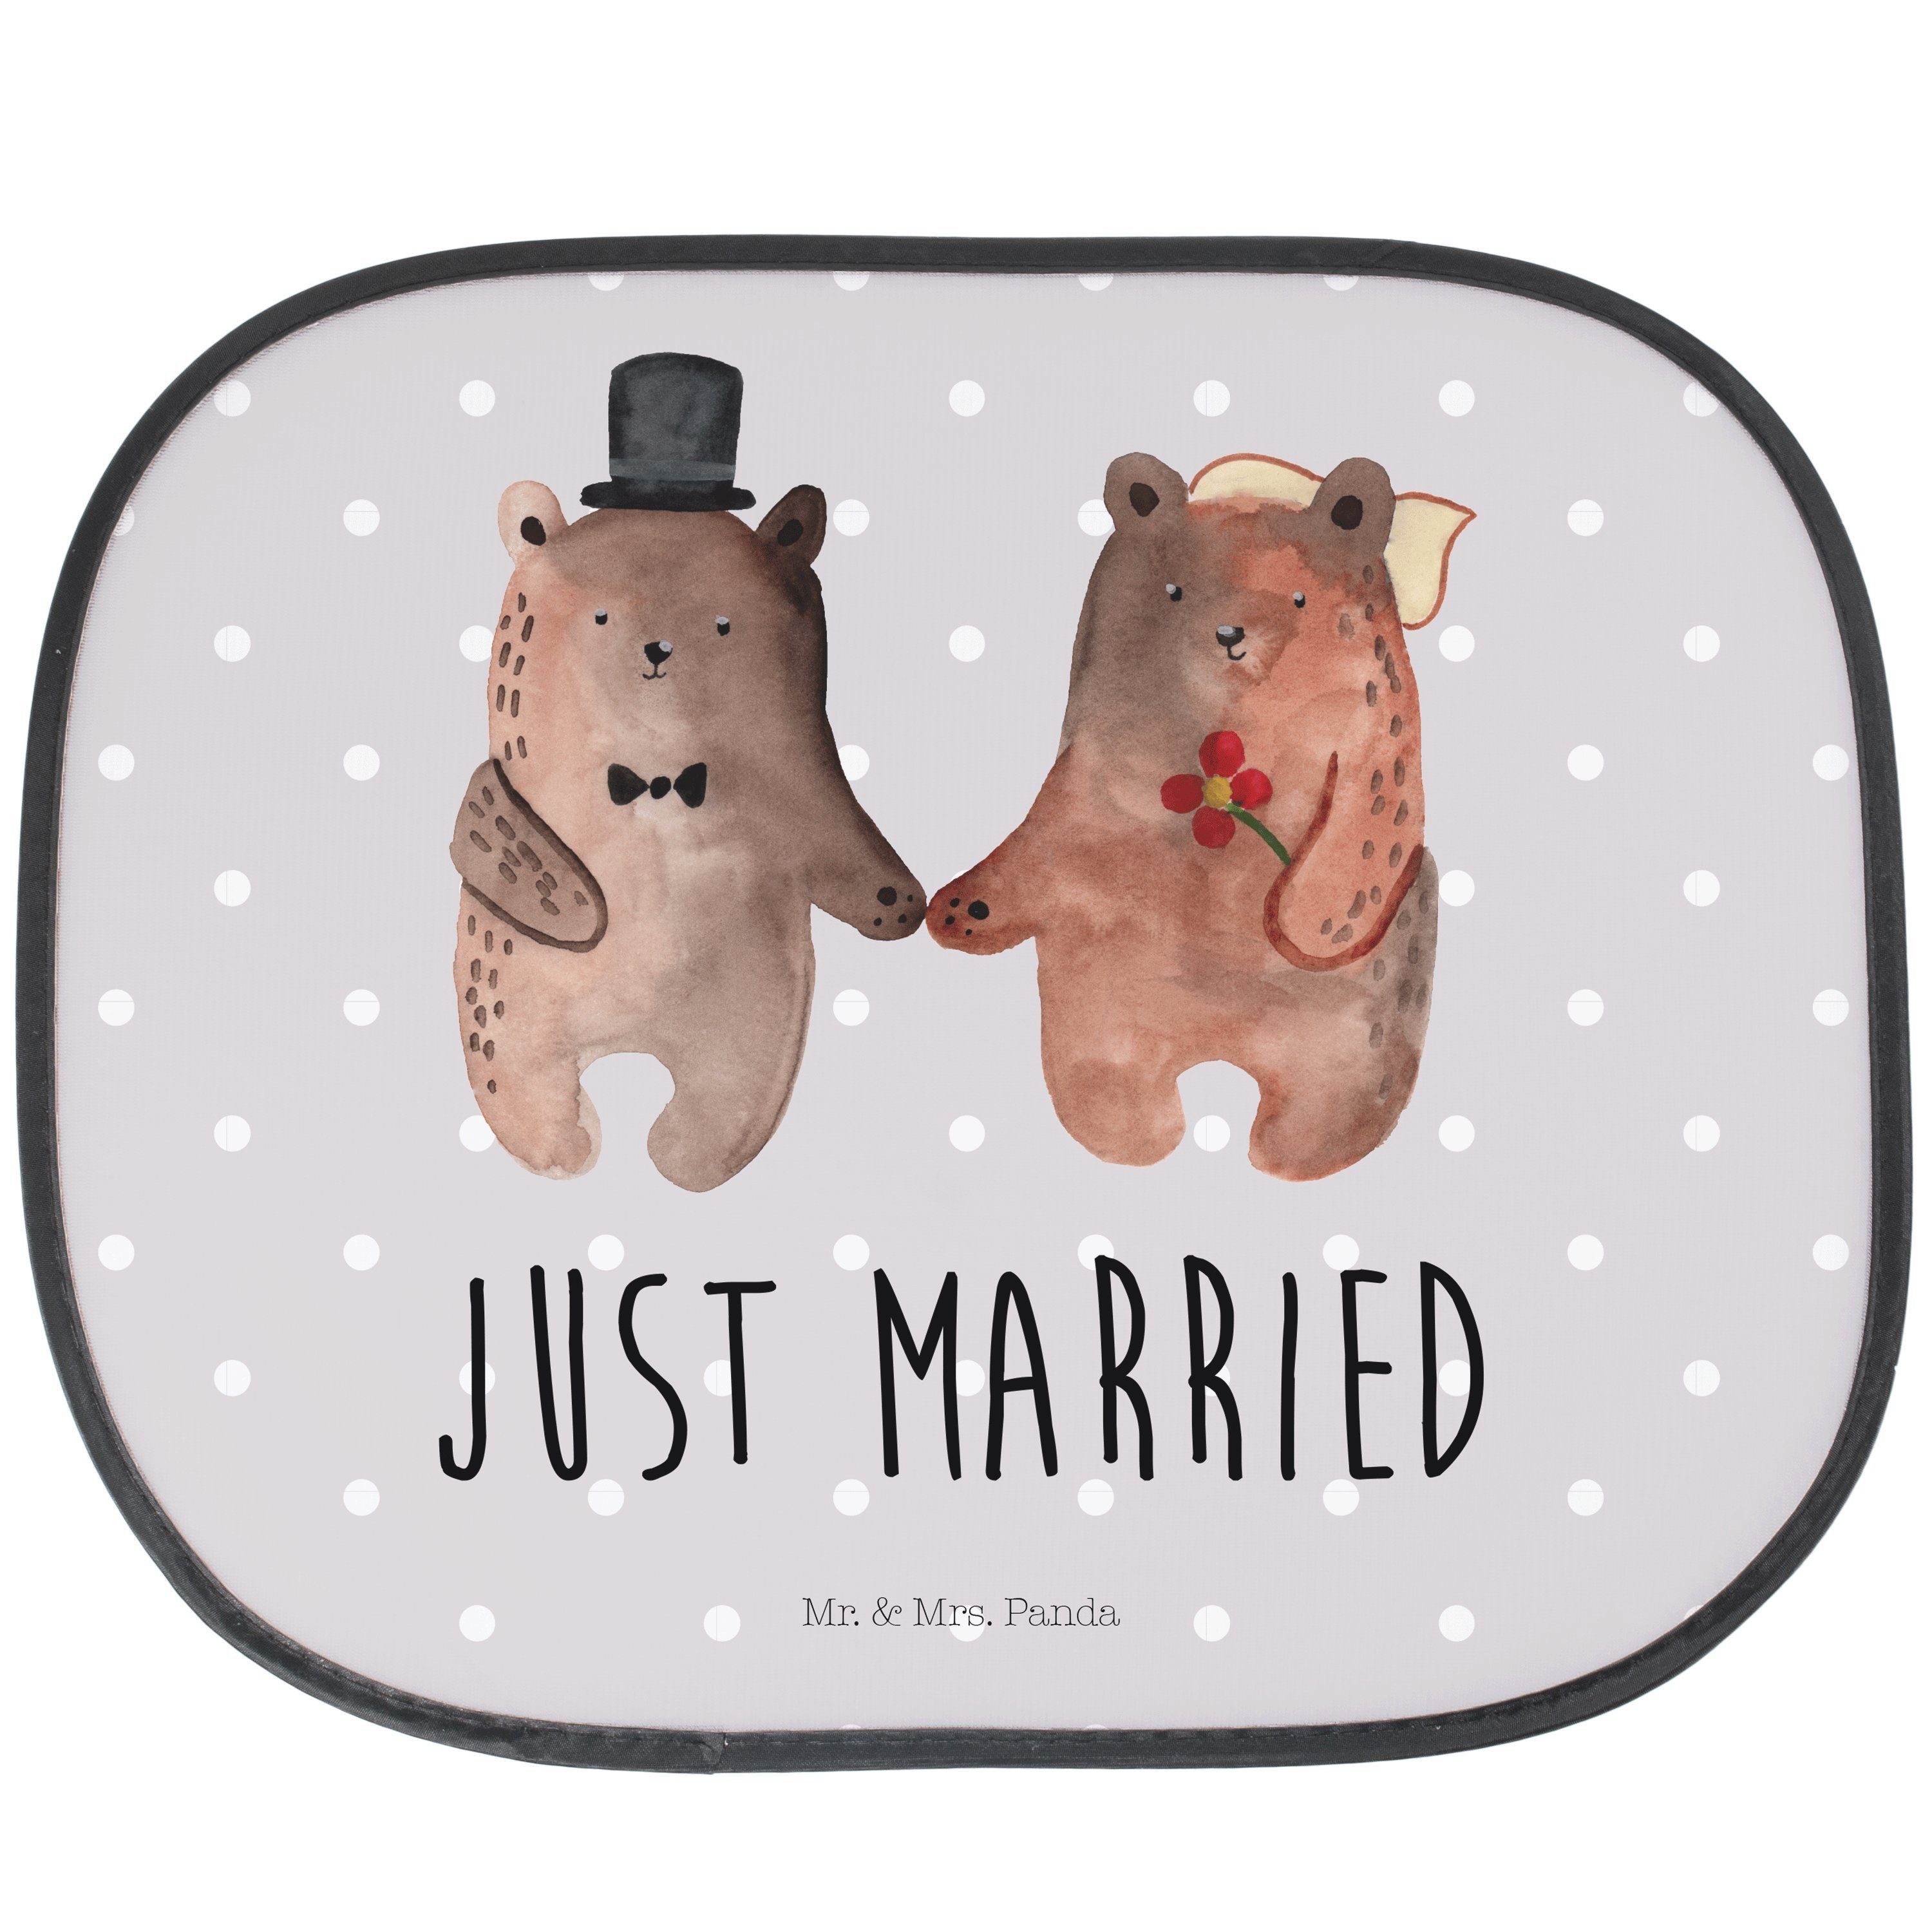 Sonnenschutz Bär Heirat - Grau Pastell - Geschenk, Teddybär, Sonne Auto, Teddy, Bä, Mr. & Mrs. Panda, Seidenmatt